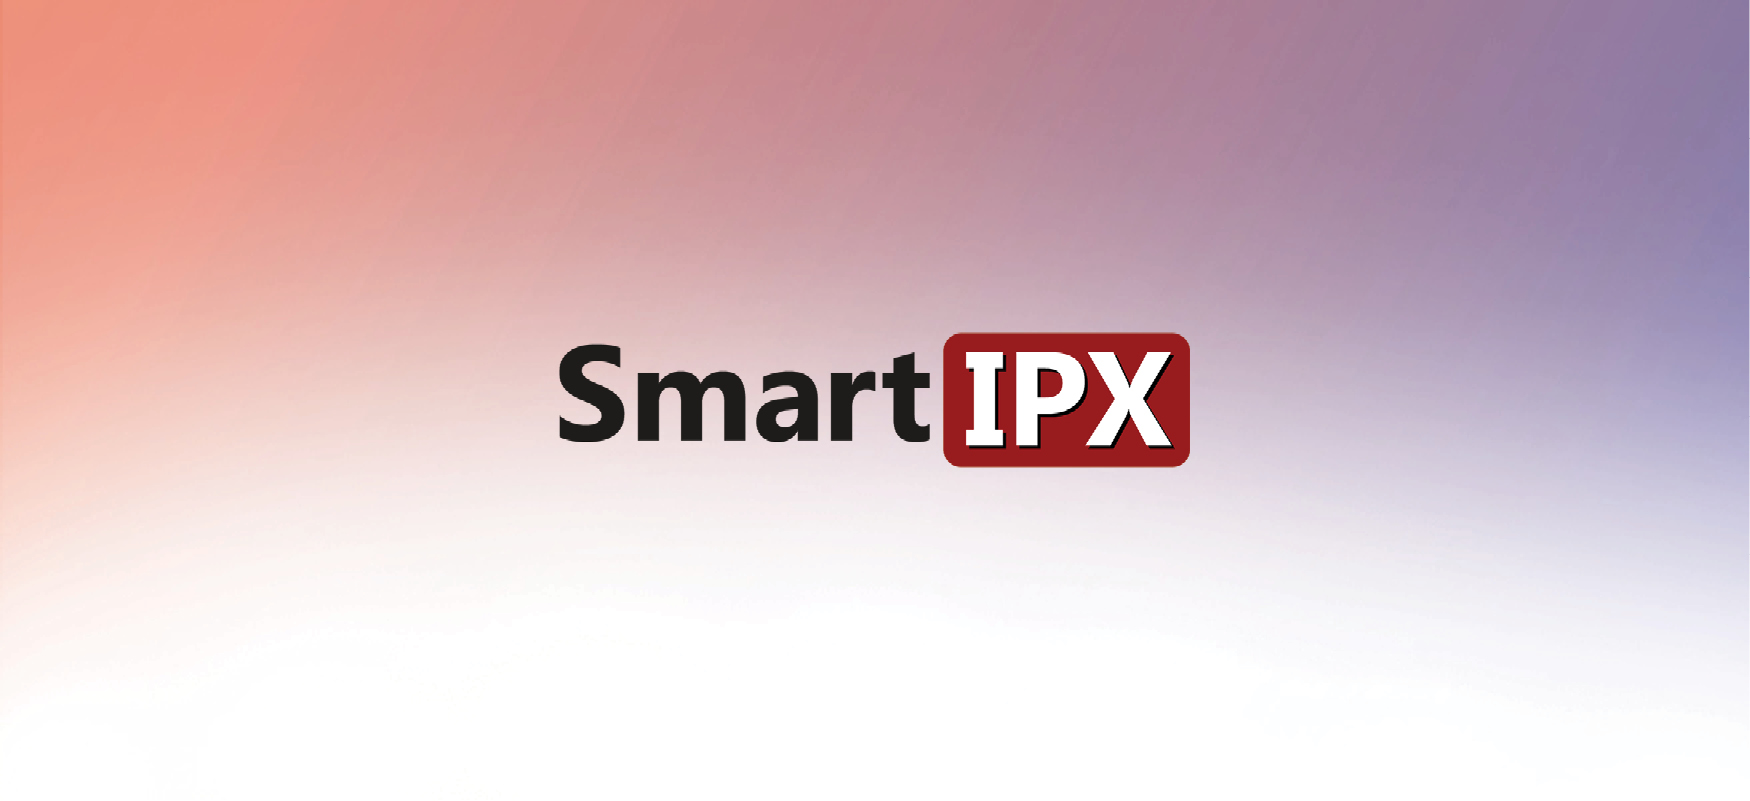 SmartIPX and Epsilon Announce eINX Peering Partnership Agreement